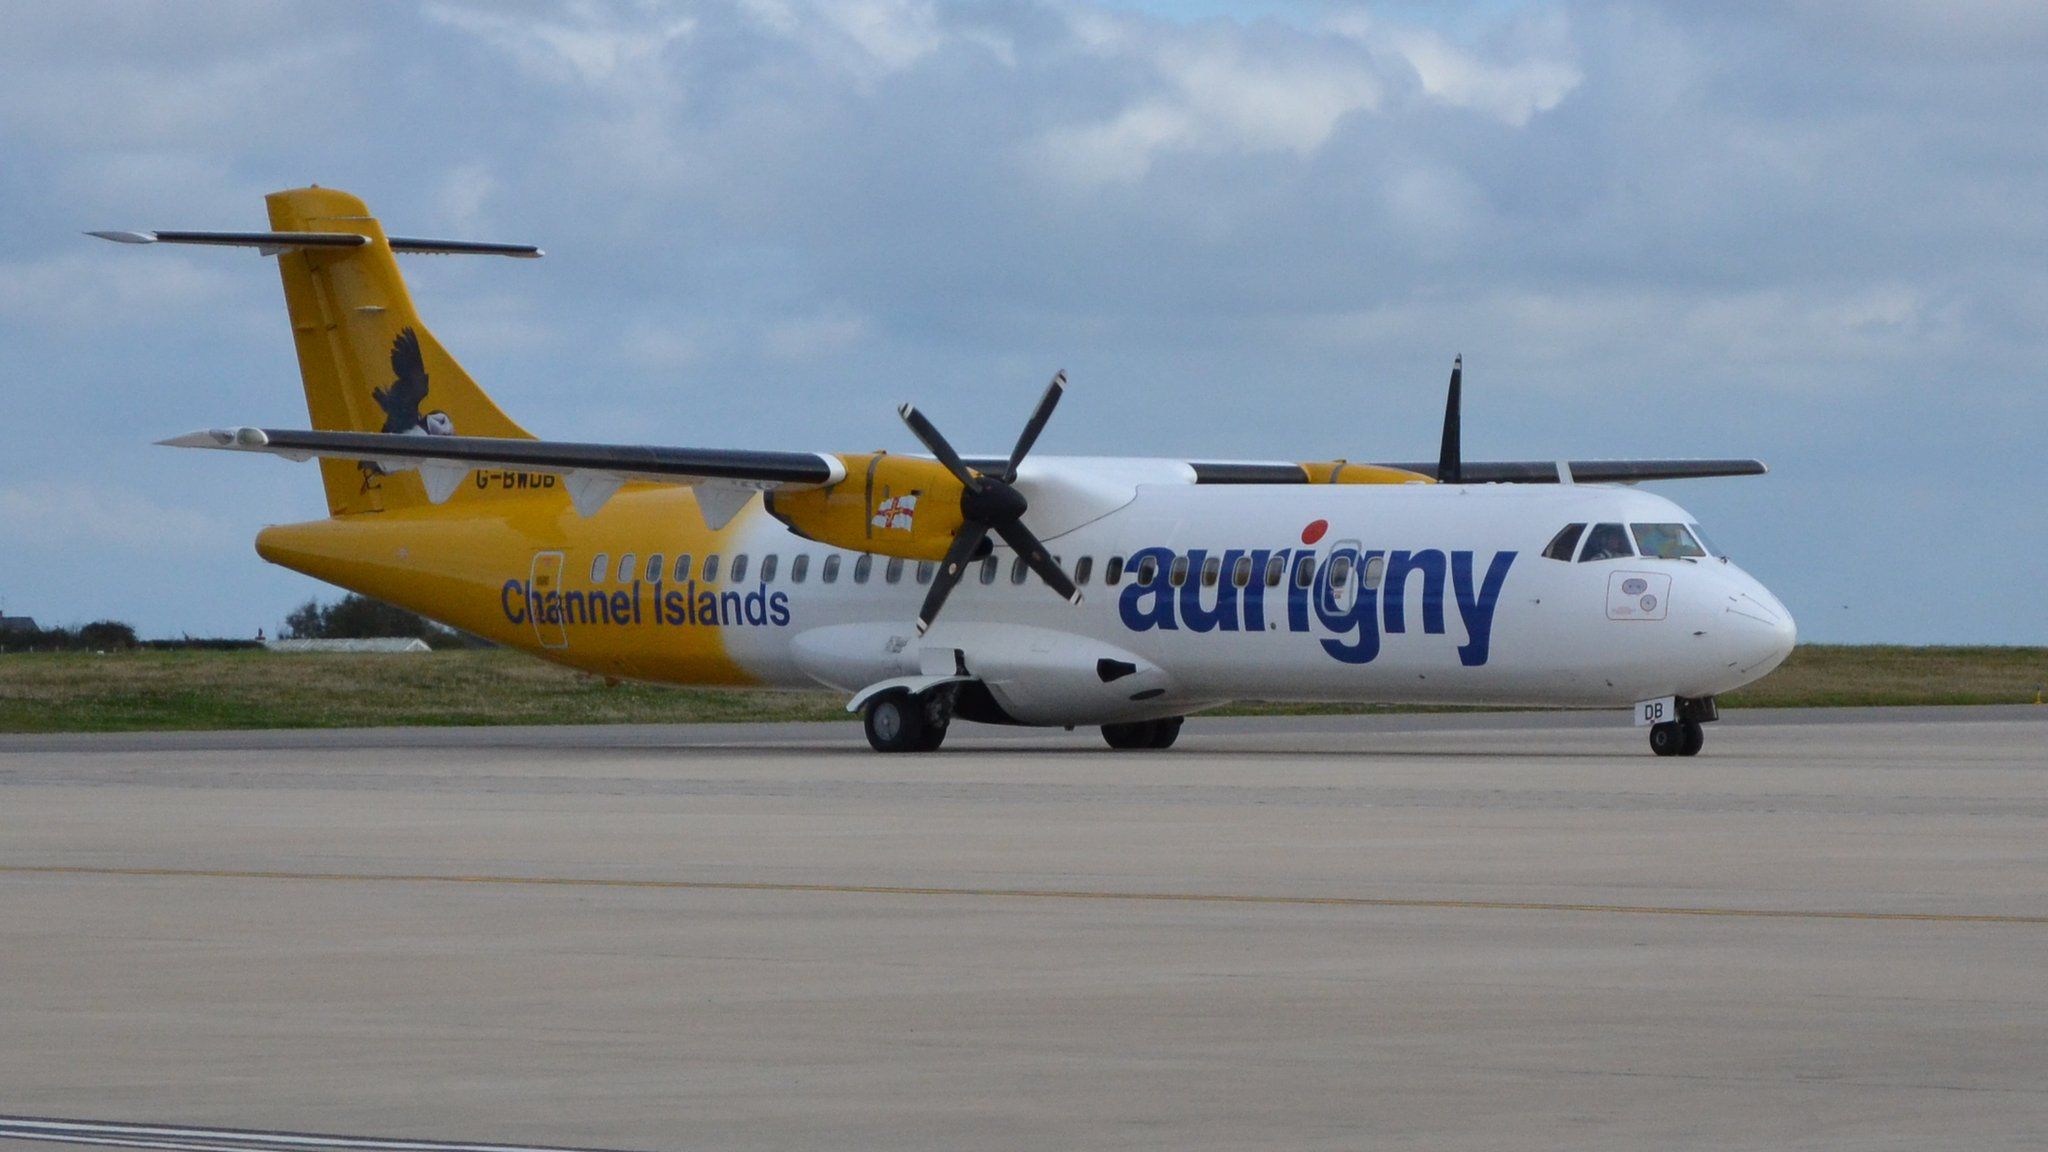 Aurigny ATR plane at Guernsey Airport